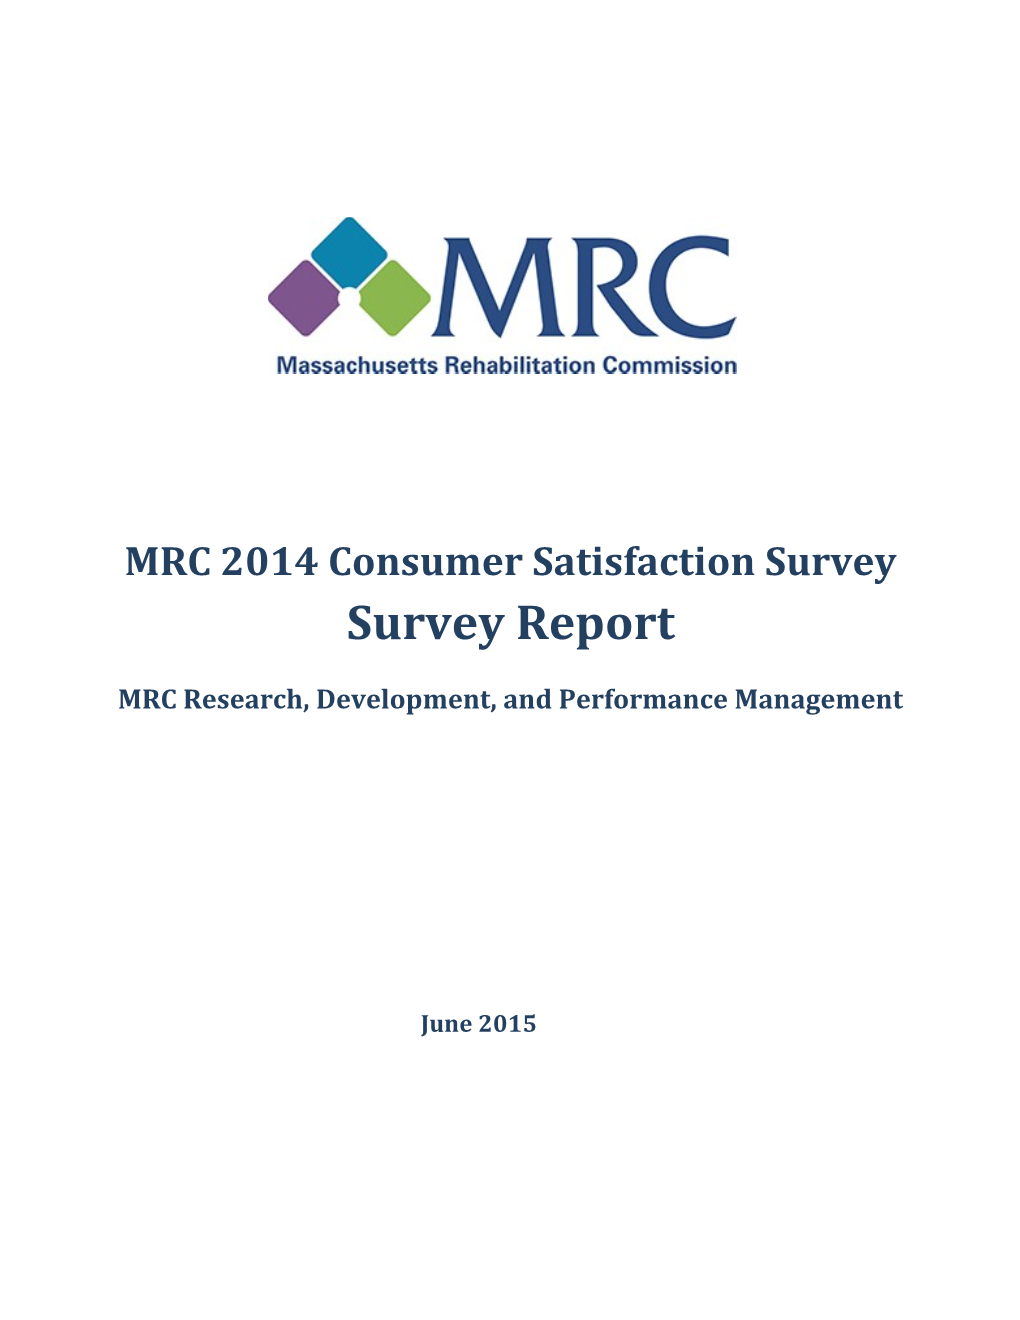 Consumer Satisfaction Survey FFY 2013 Report